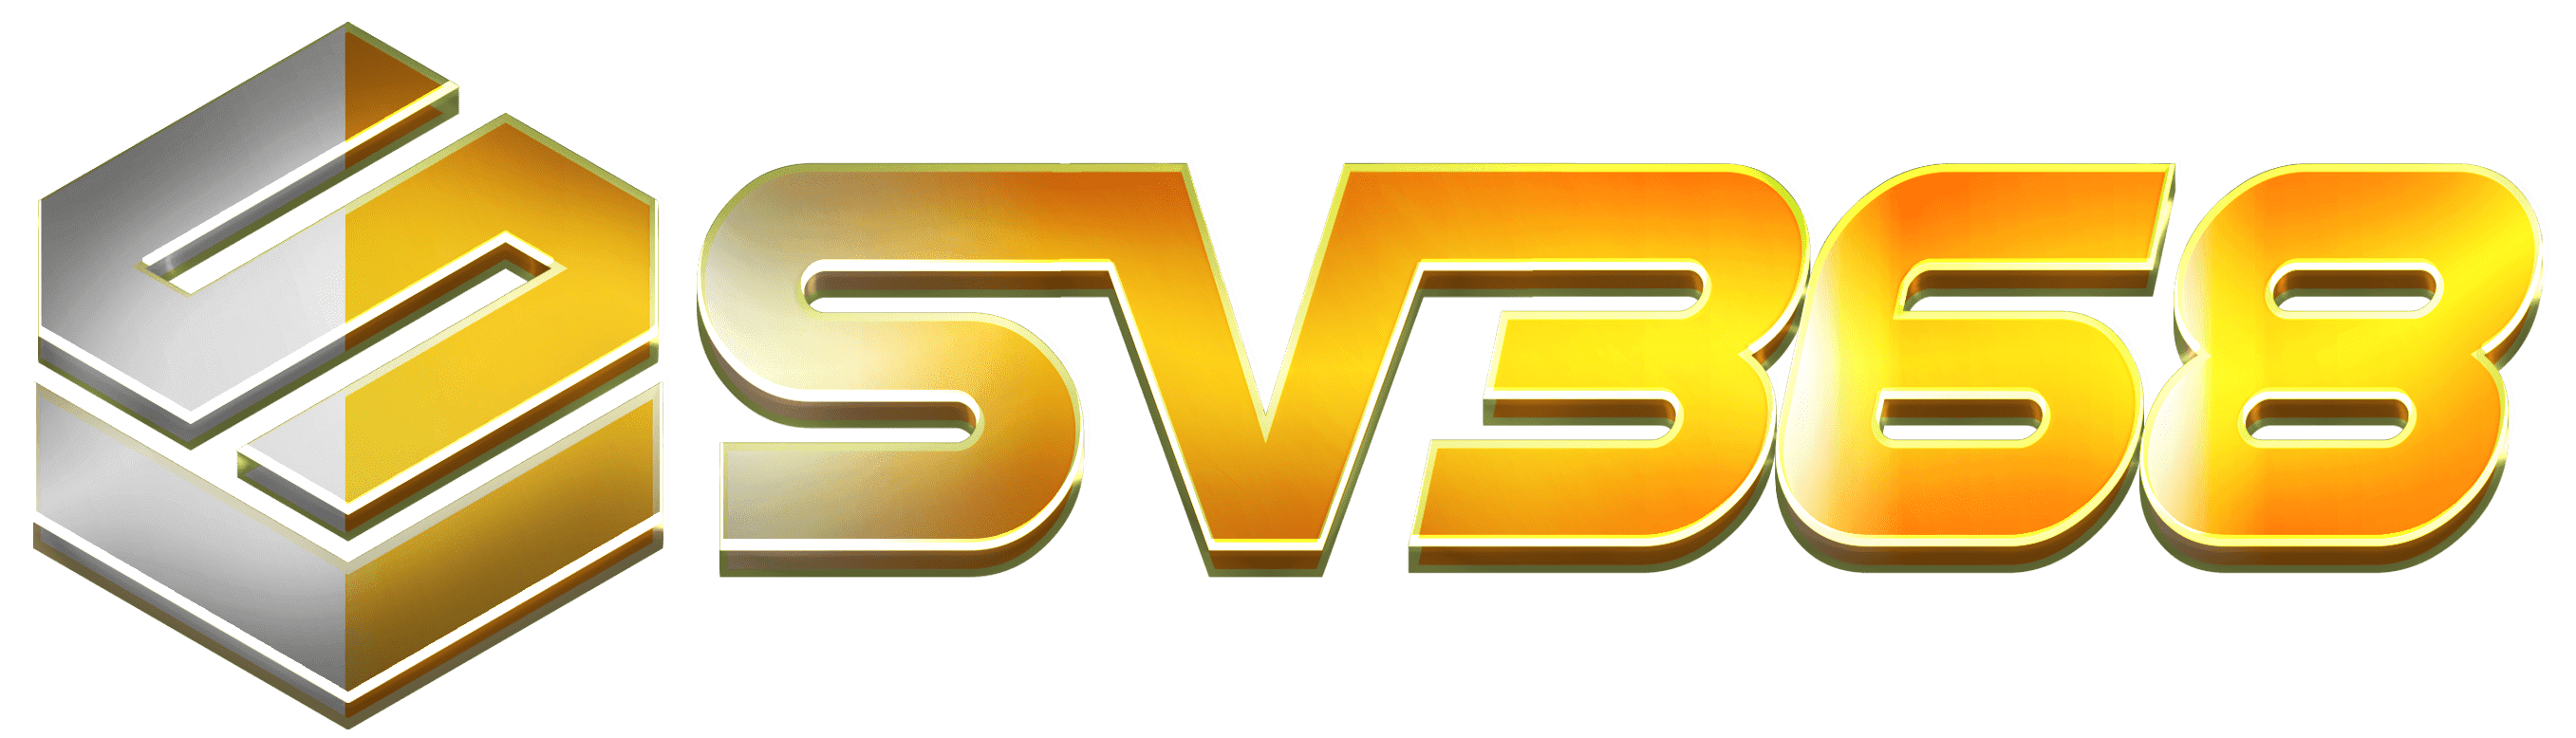 logo-sv368